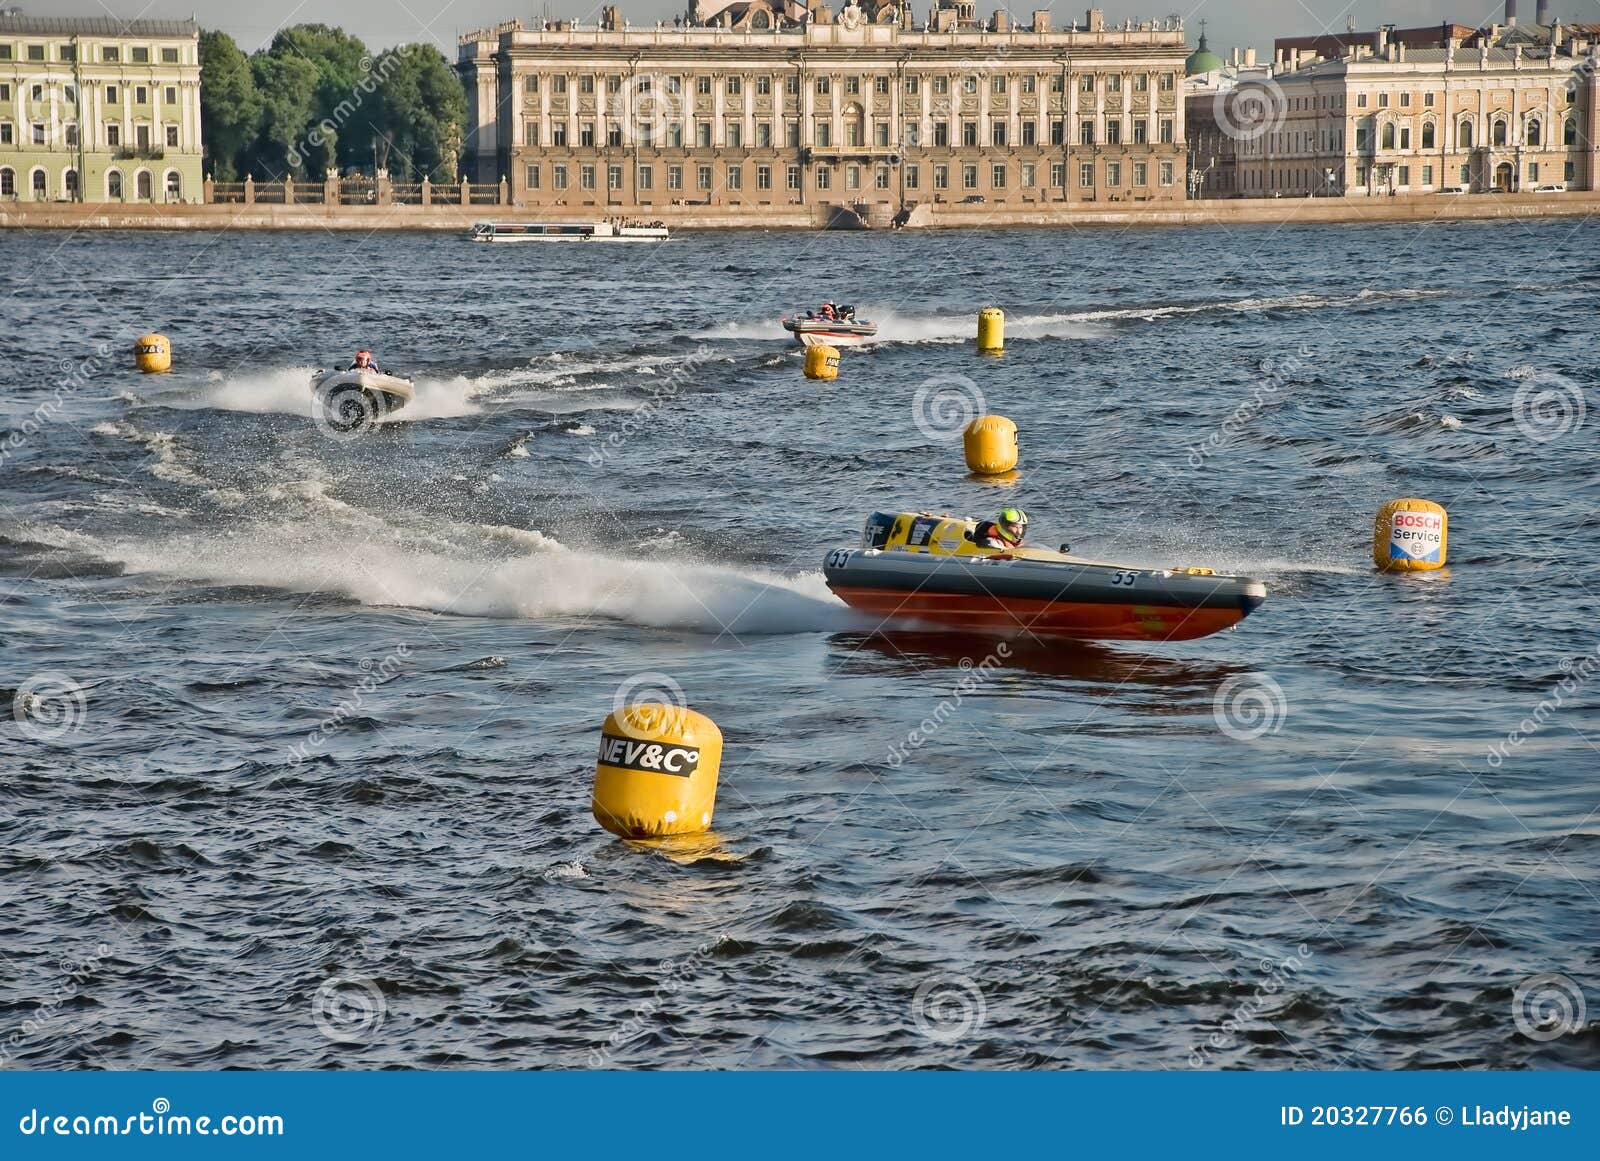 24 Hours Boat Race in Saint Petersburg Editorial Photo Image of